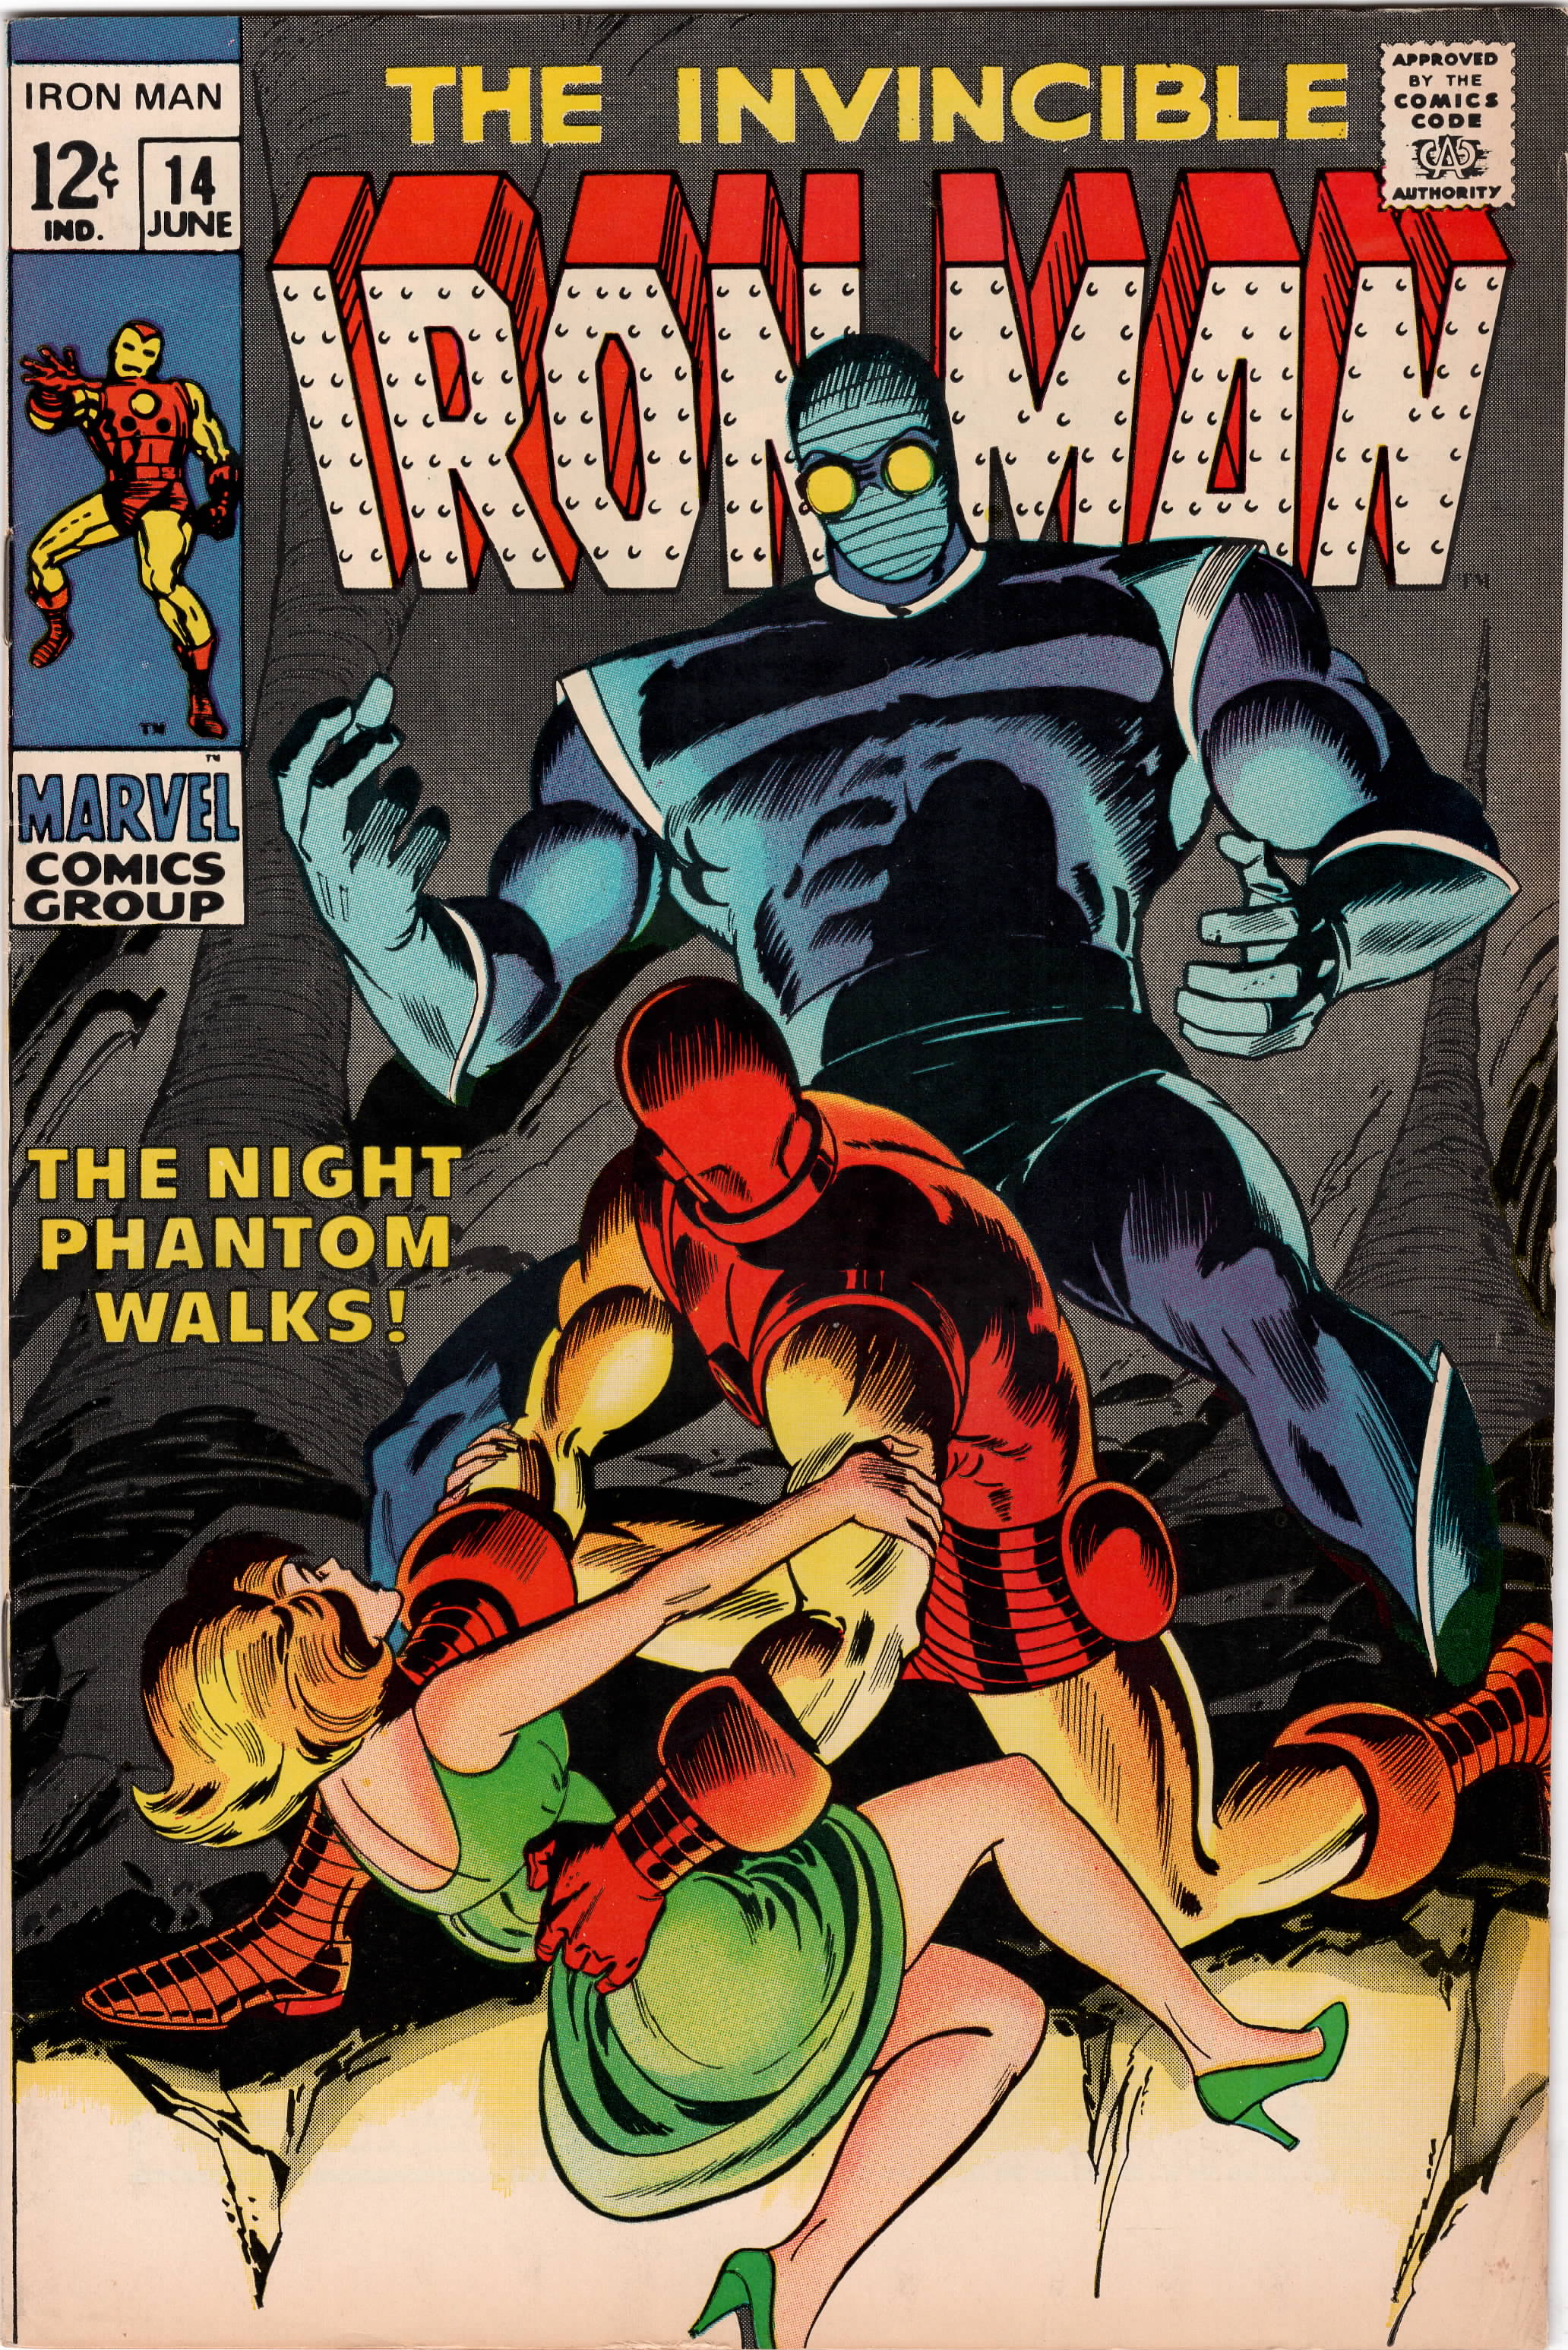 Iron Man #014